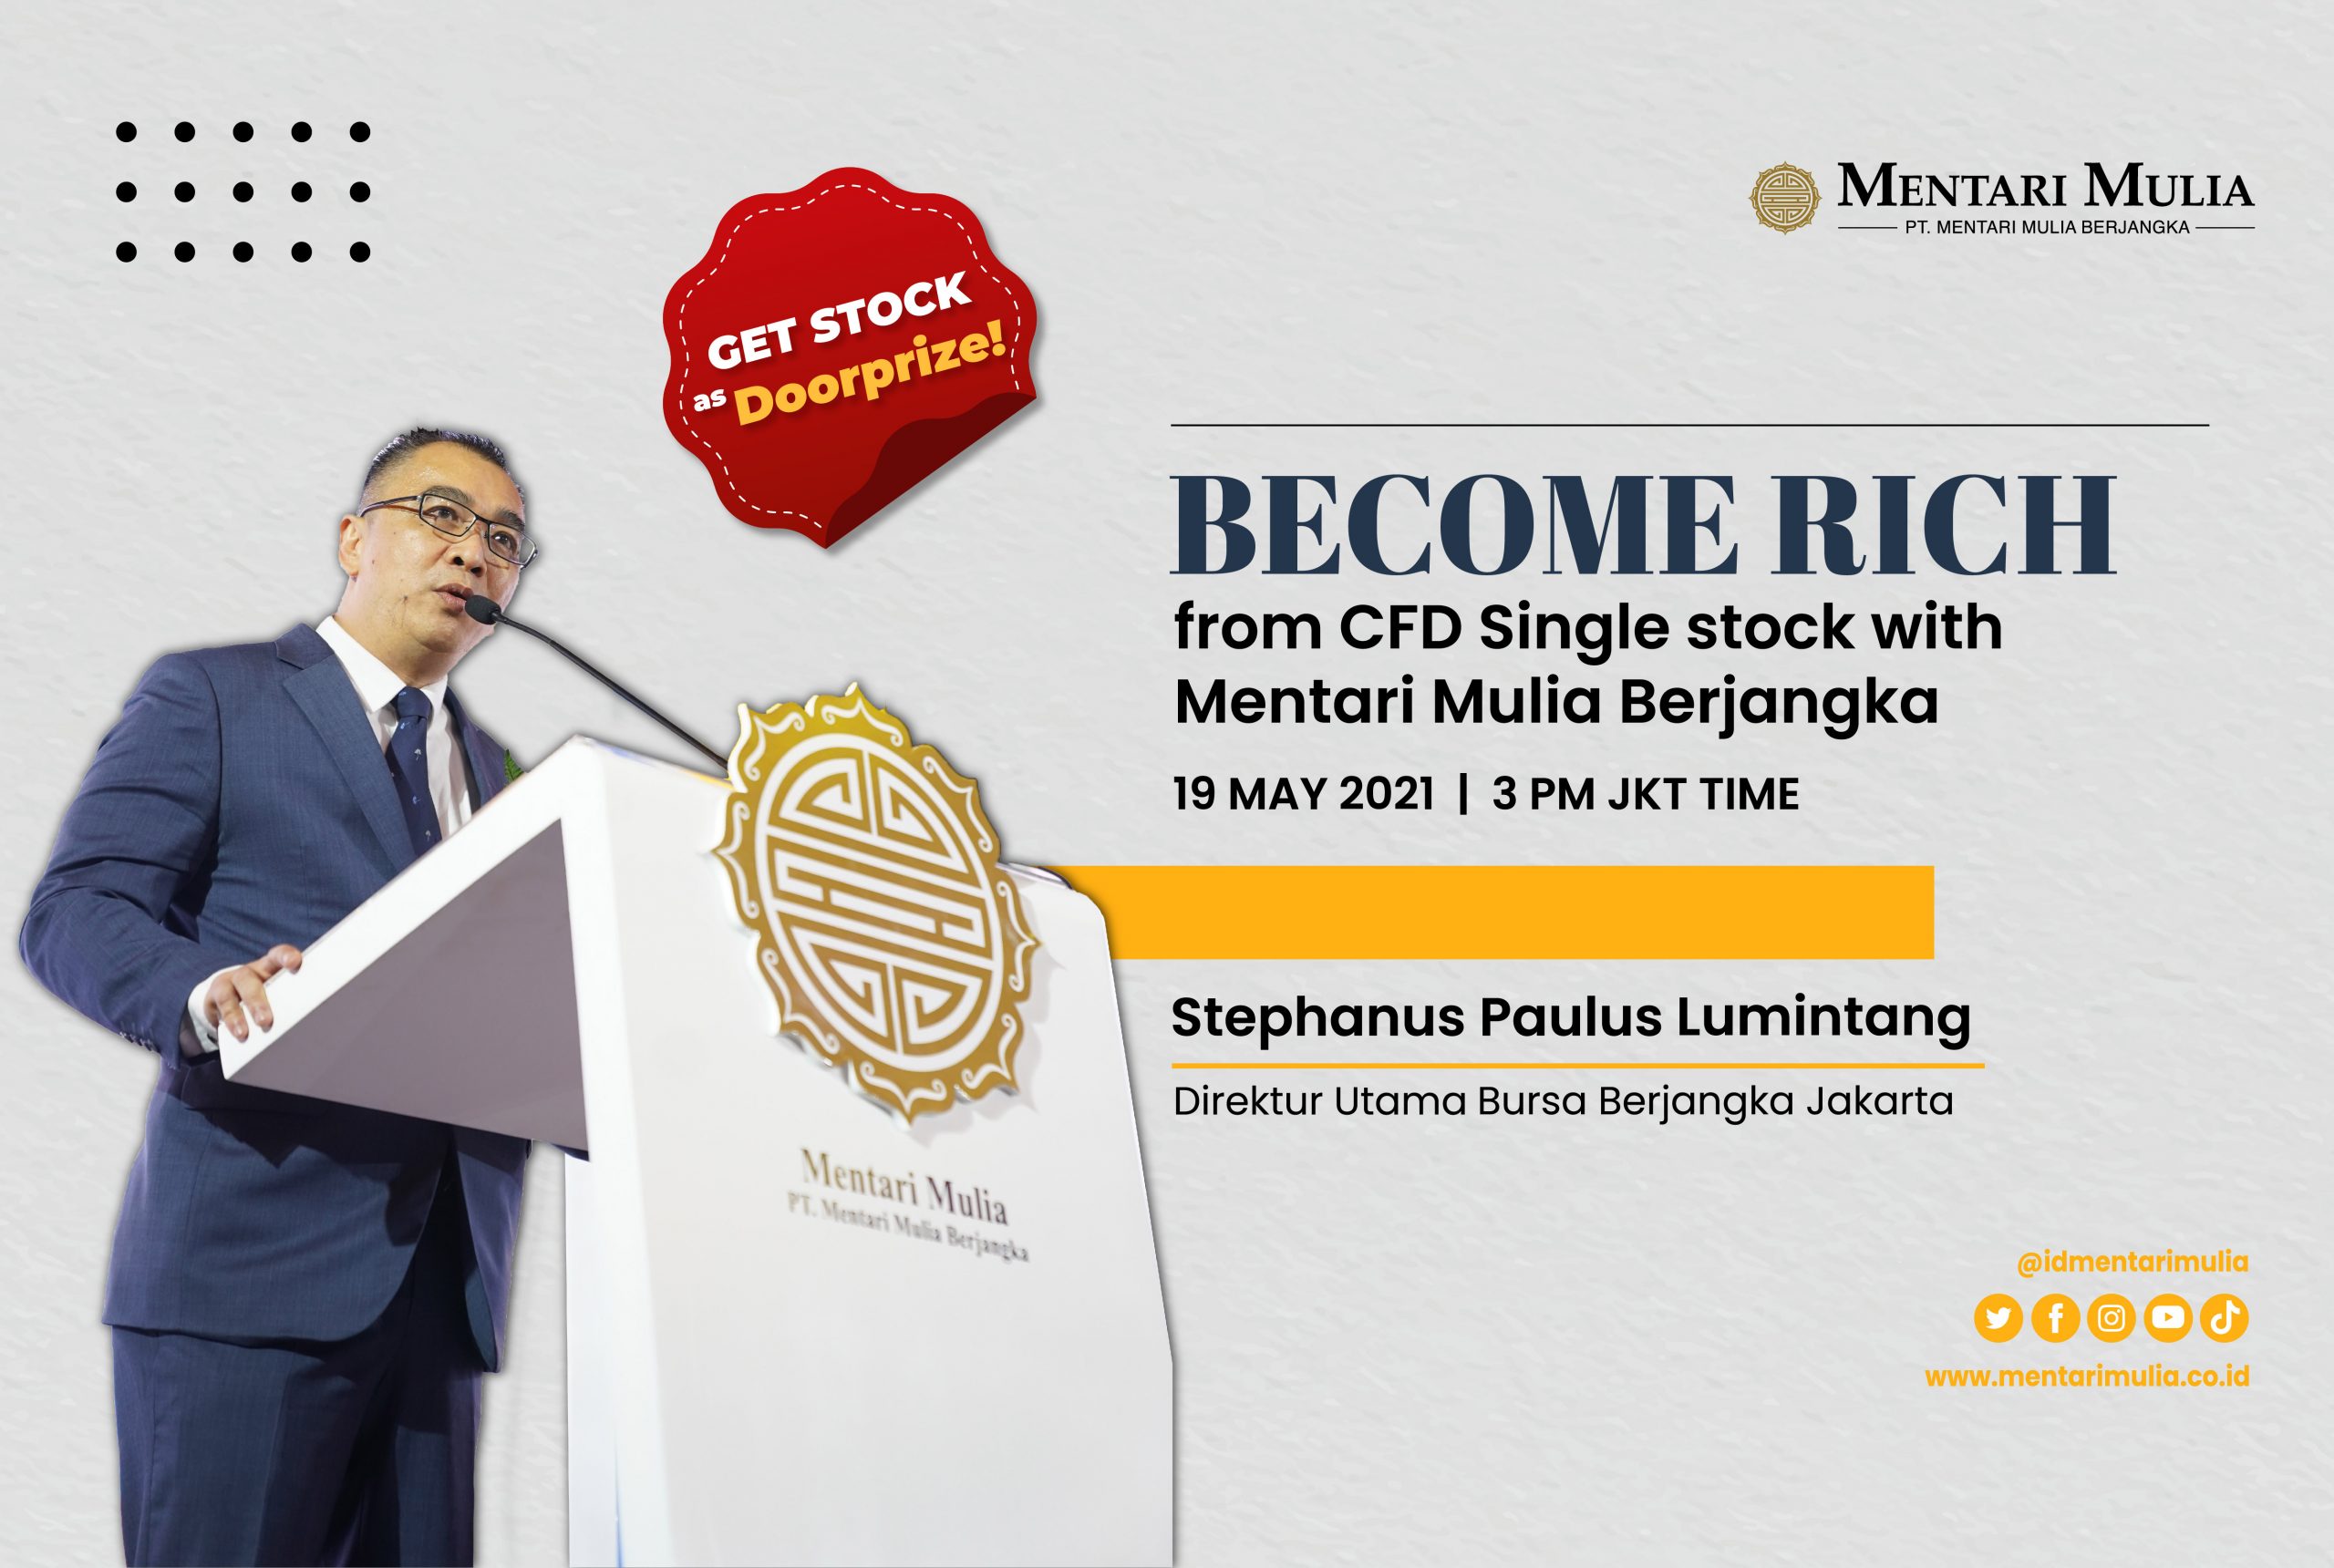 Diskusi Panel “Become Rich From CFD Single Stock” Bersama Stephanus Paulus Lumintang, Direktur Utama Bursa Berjangka Jakarta